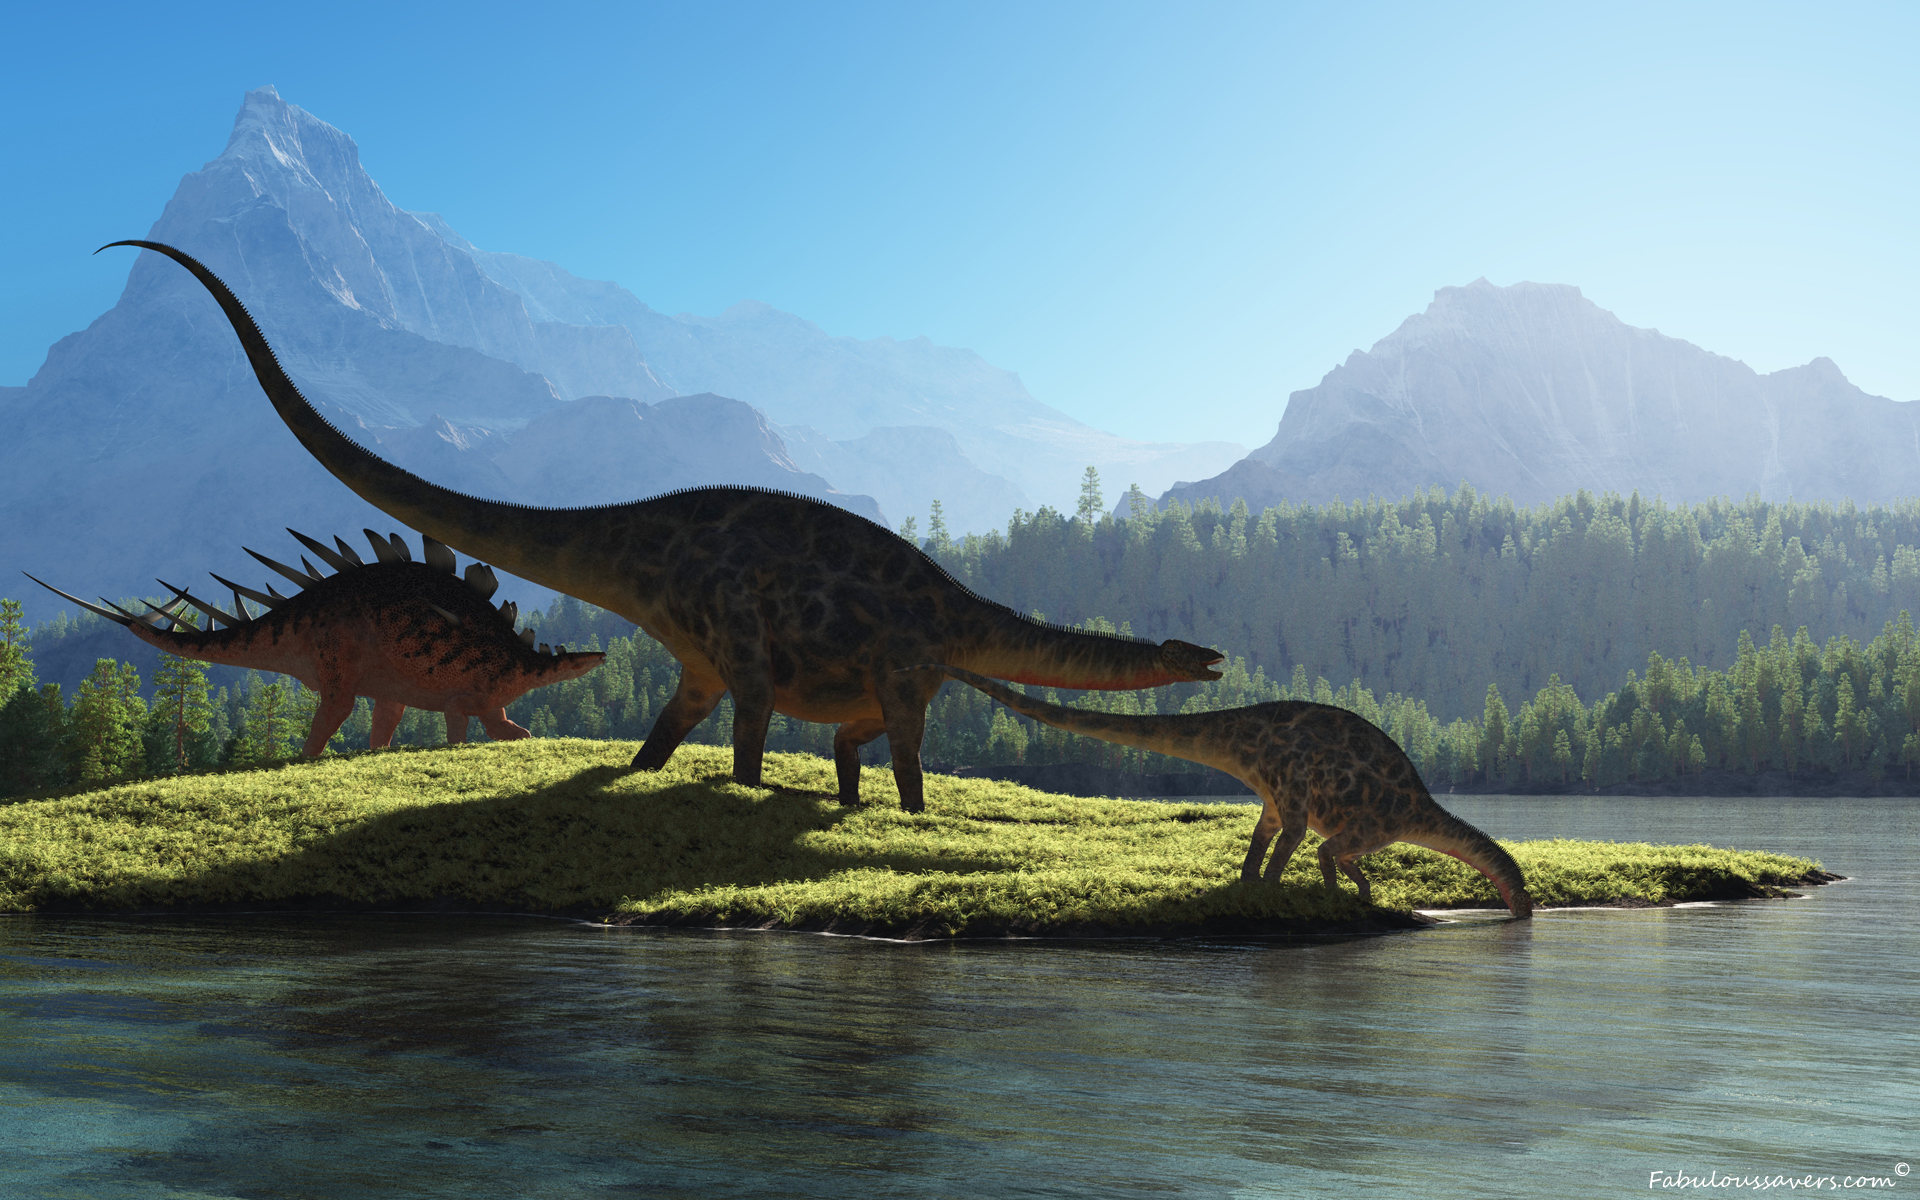 Gallery For Gt Prehistoric Landscape Dinosaurs